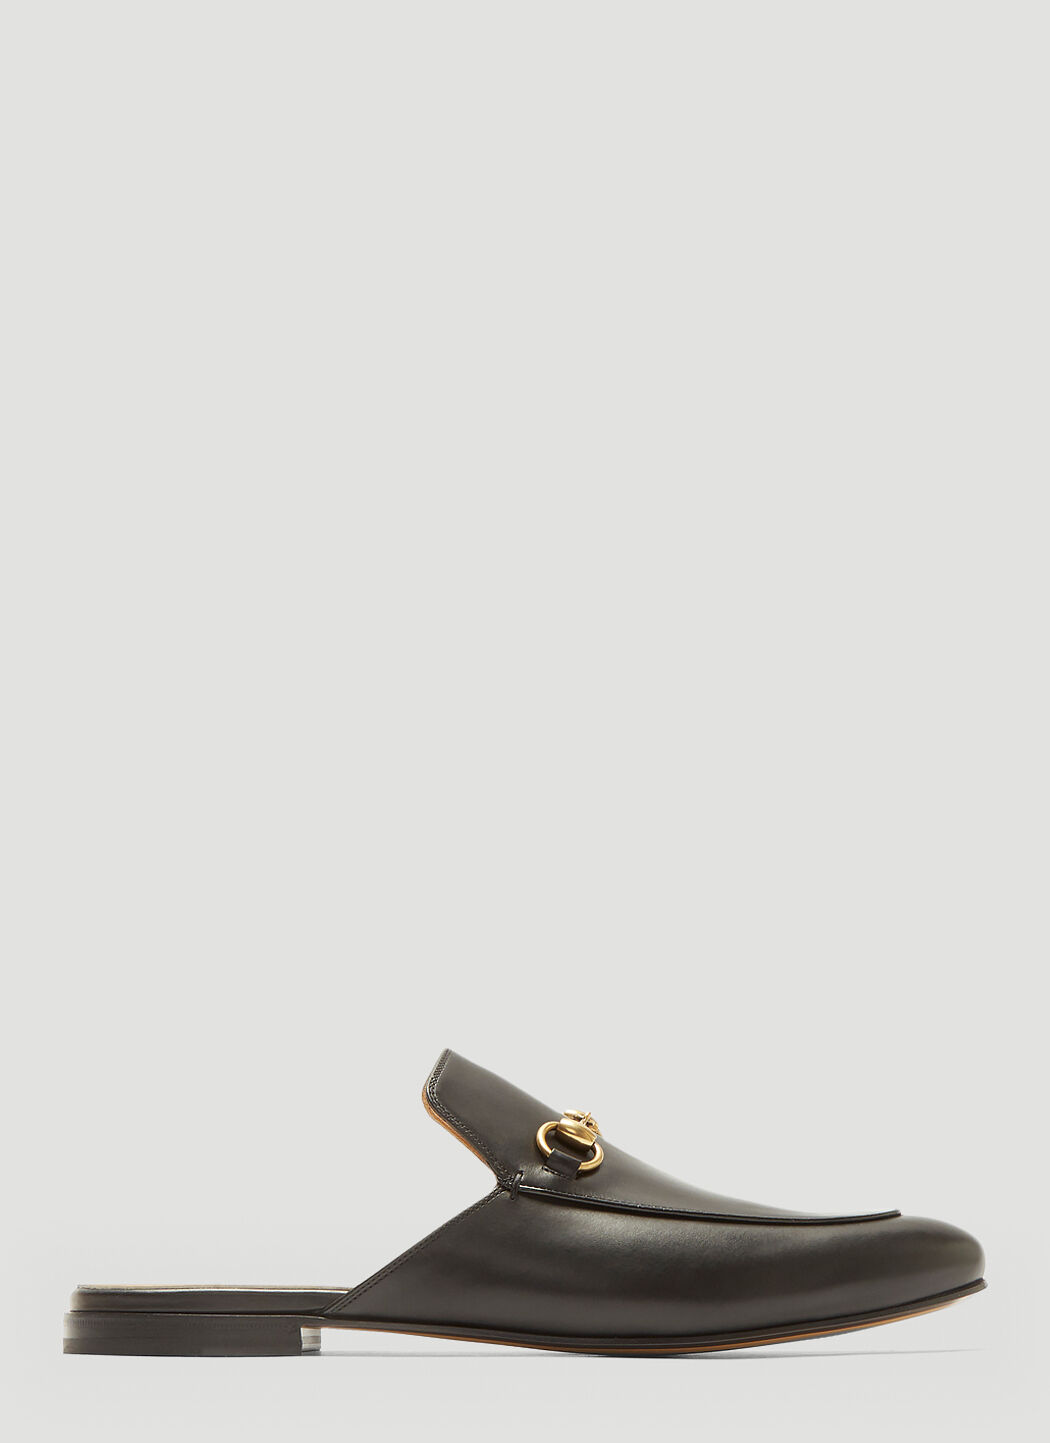 Saint Laurent Horsebit Leather Slipper Shoes Black sla0138034